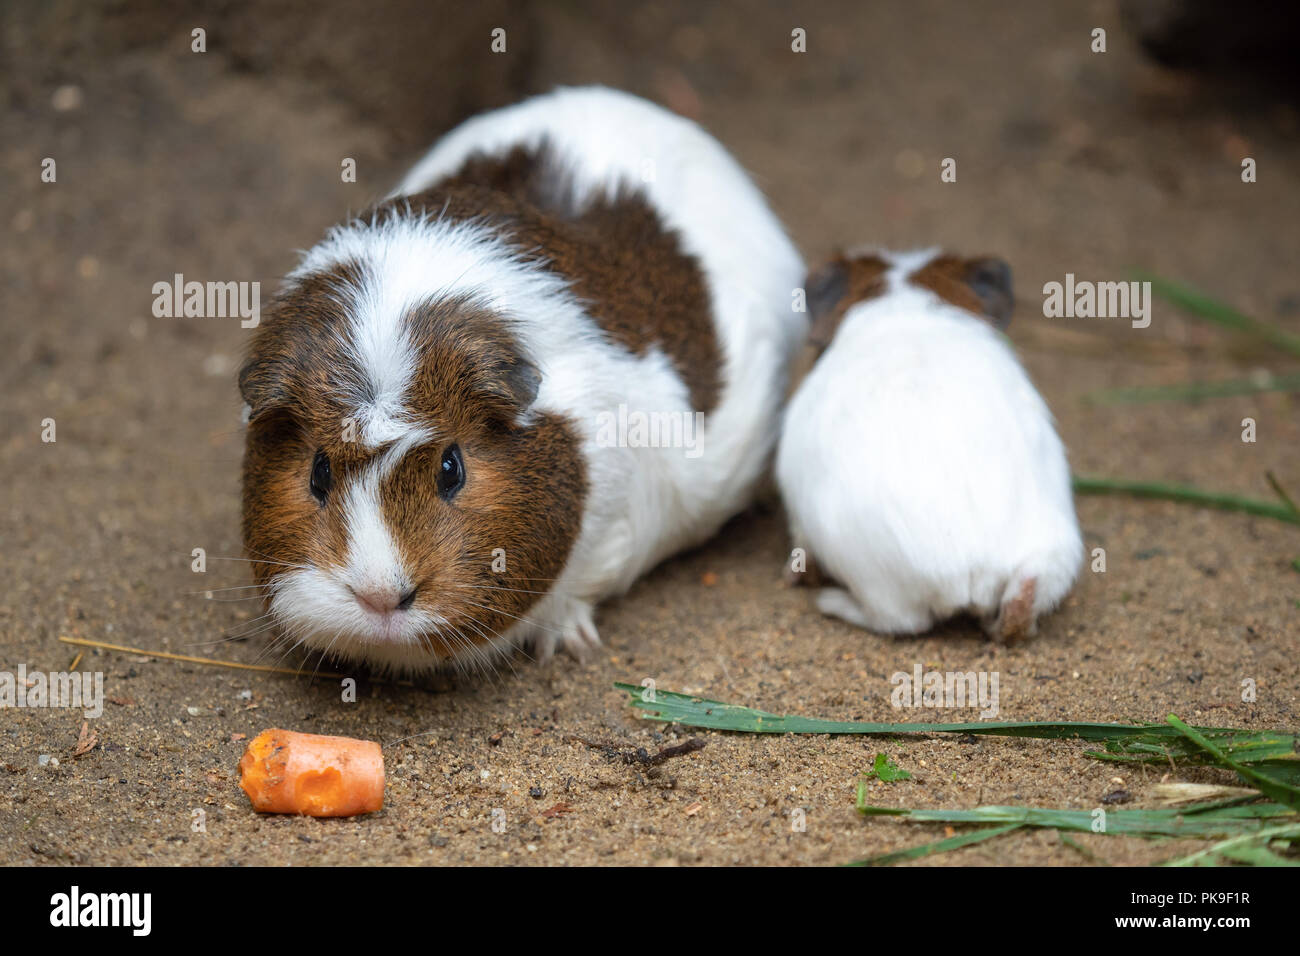 Guinea pig eats carrot (Cavia aperea f. porcellus) Stock Photo